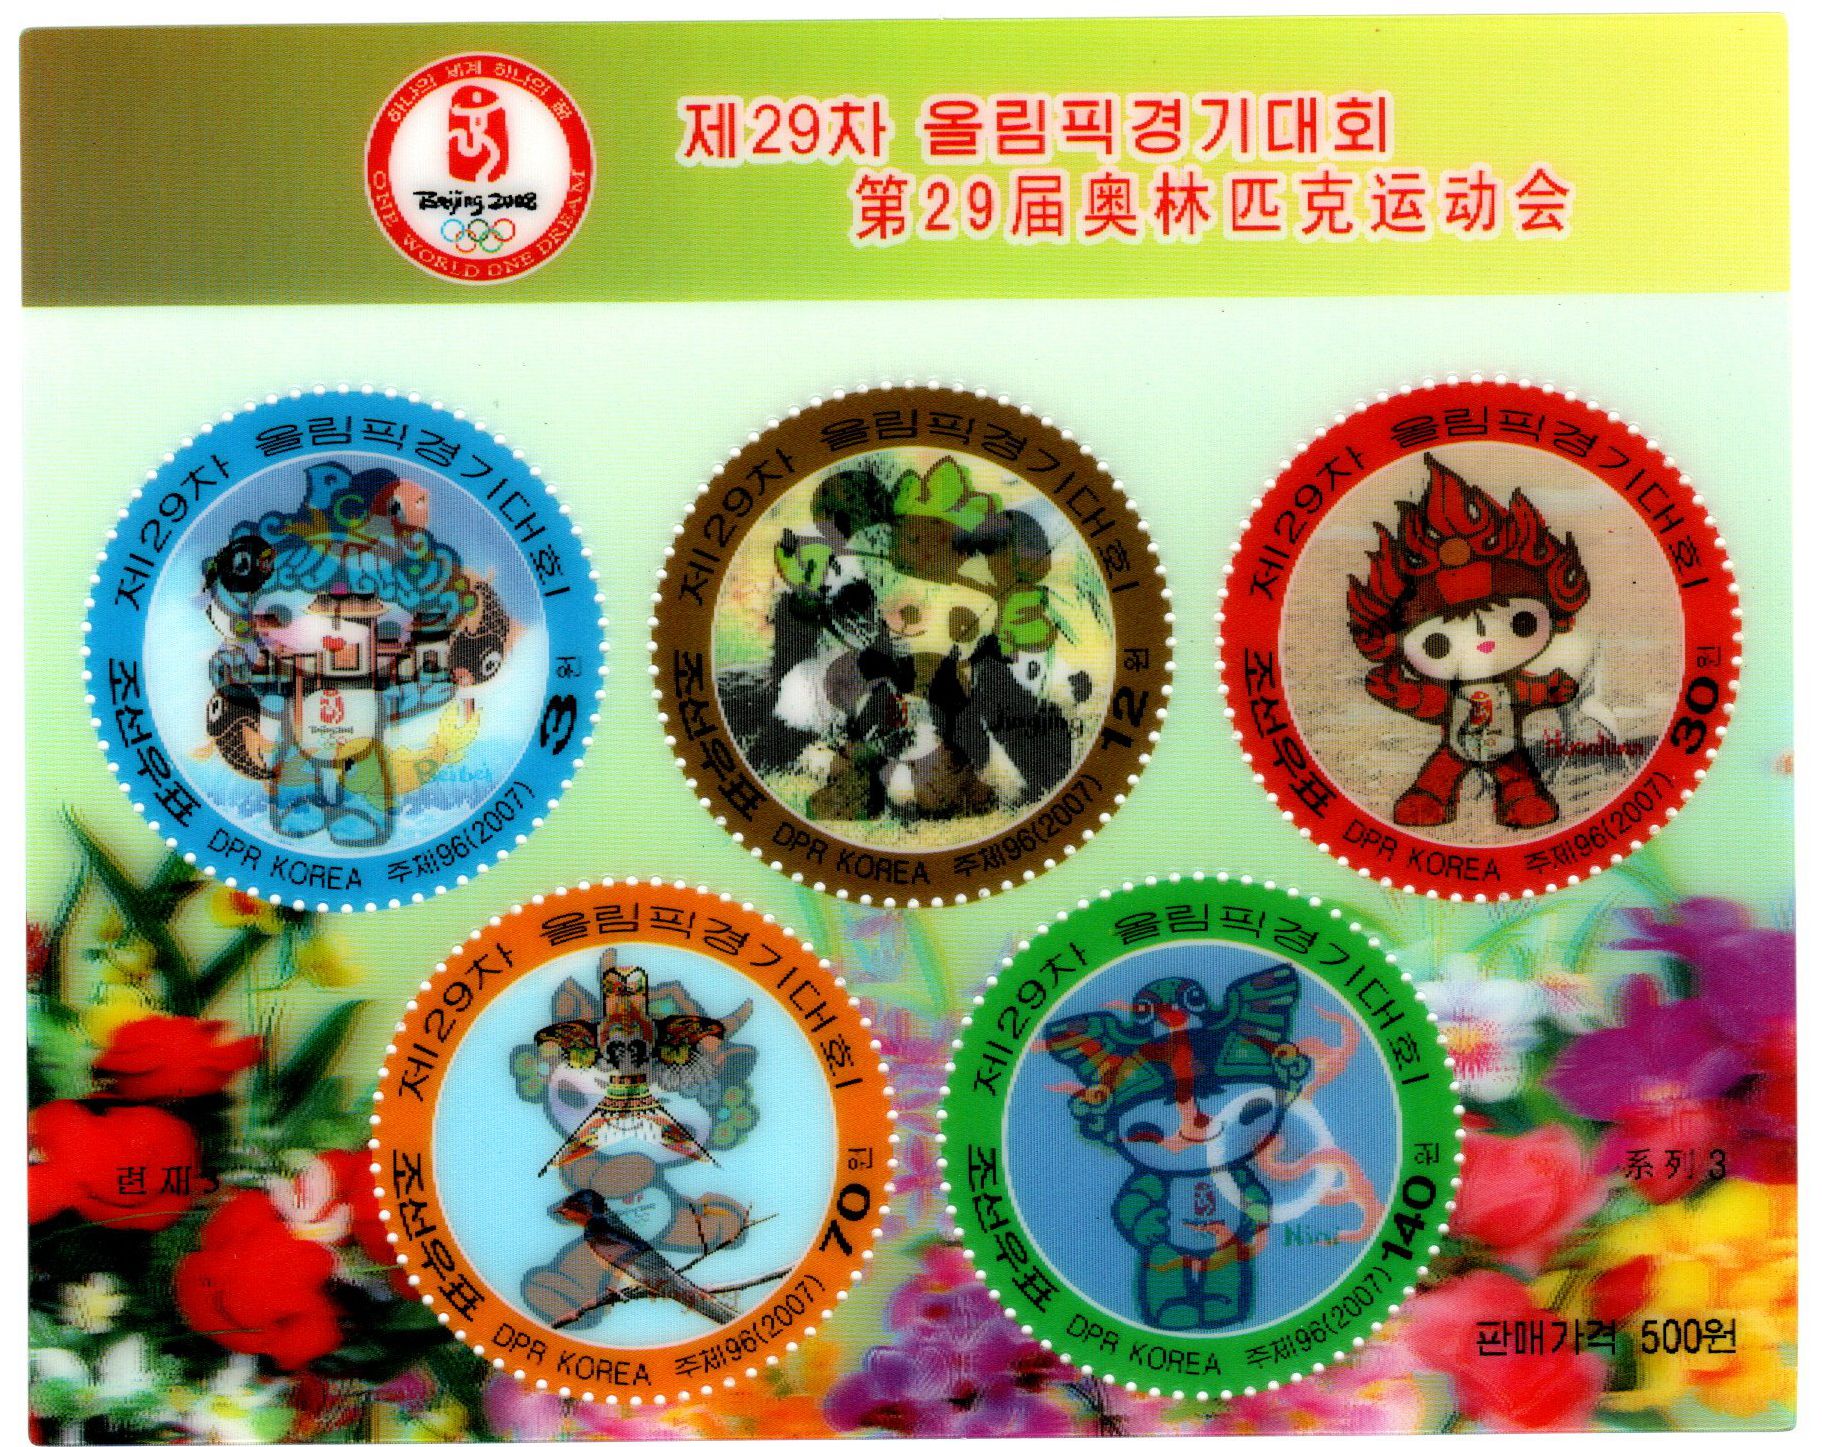 L4756, Korea 3D SS special Stamp, "2008 Beijing Olympics", 2007